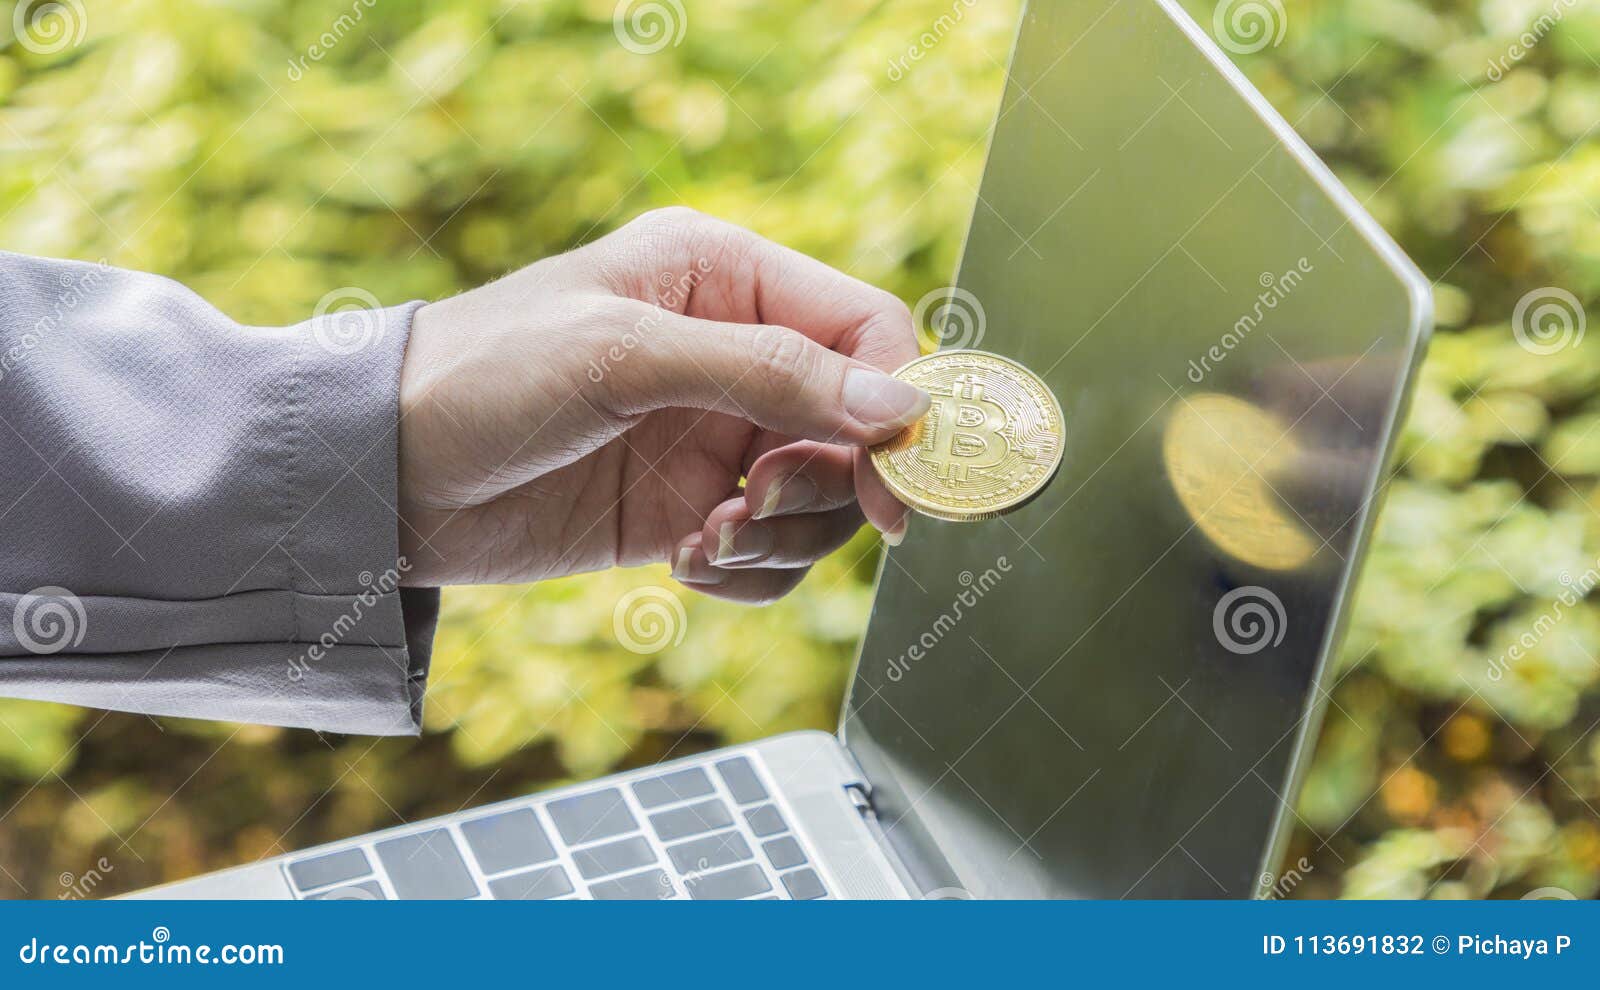 how to pull money off crypto.com